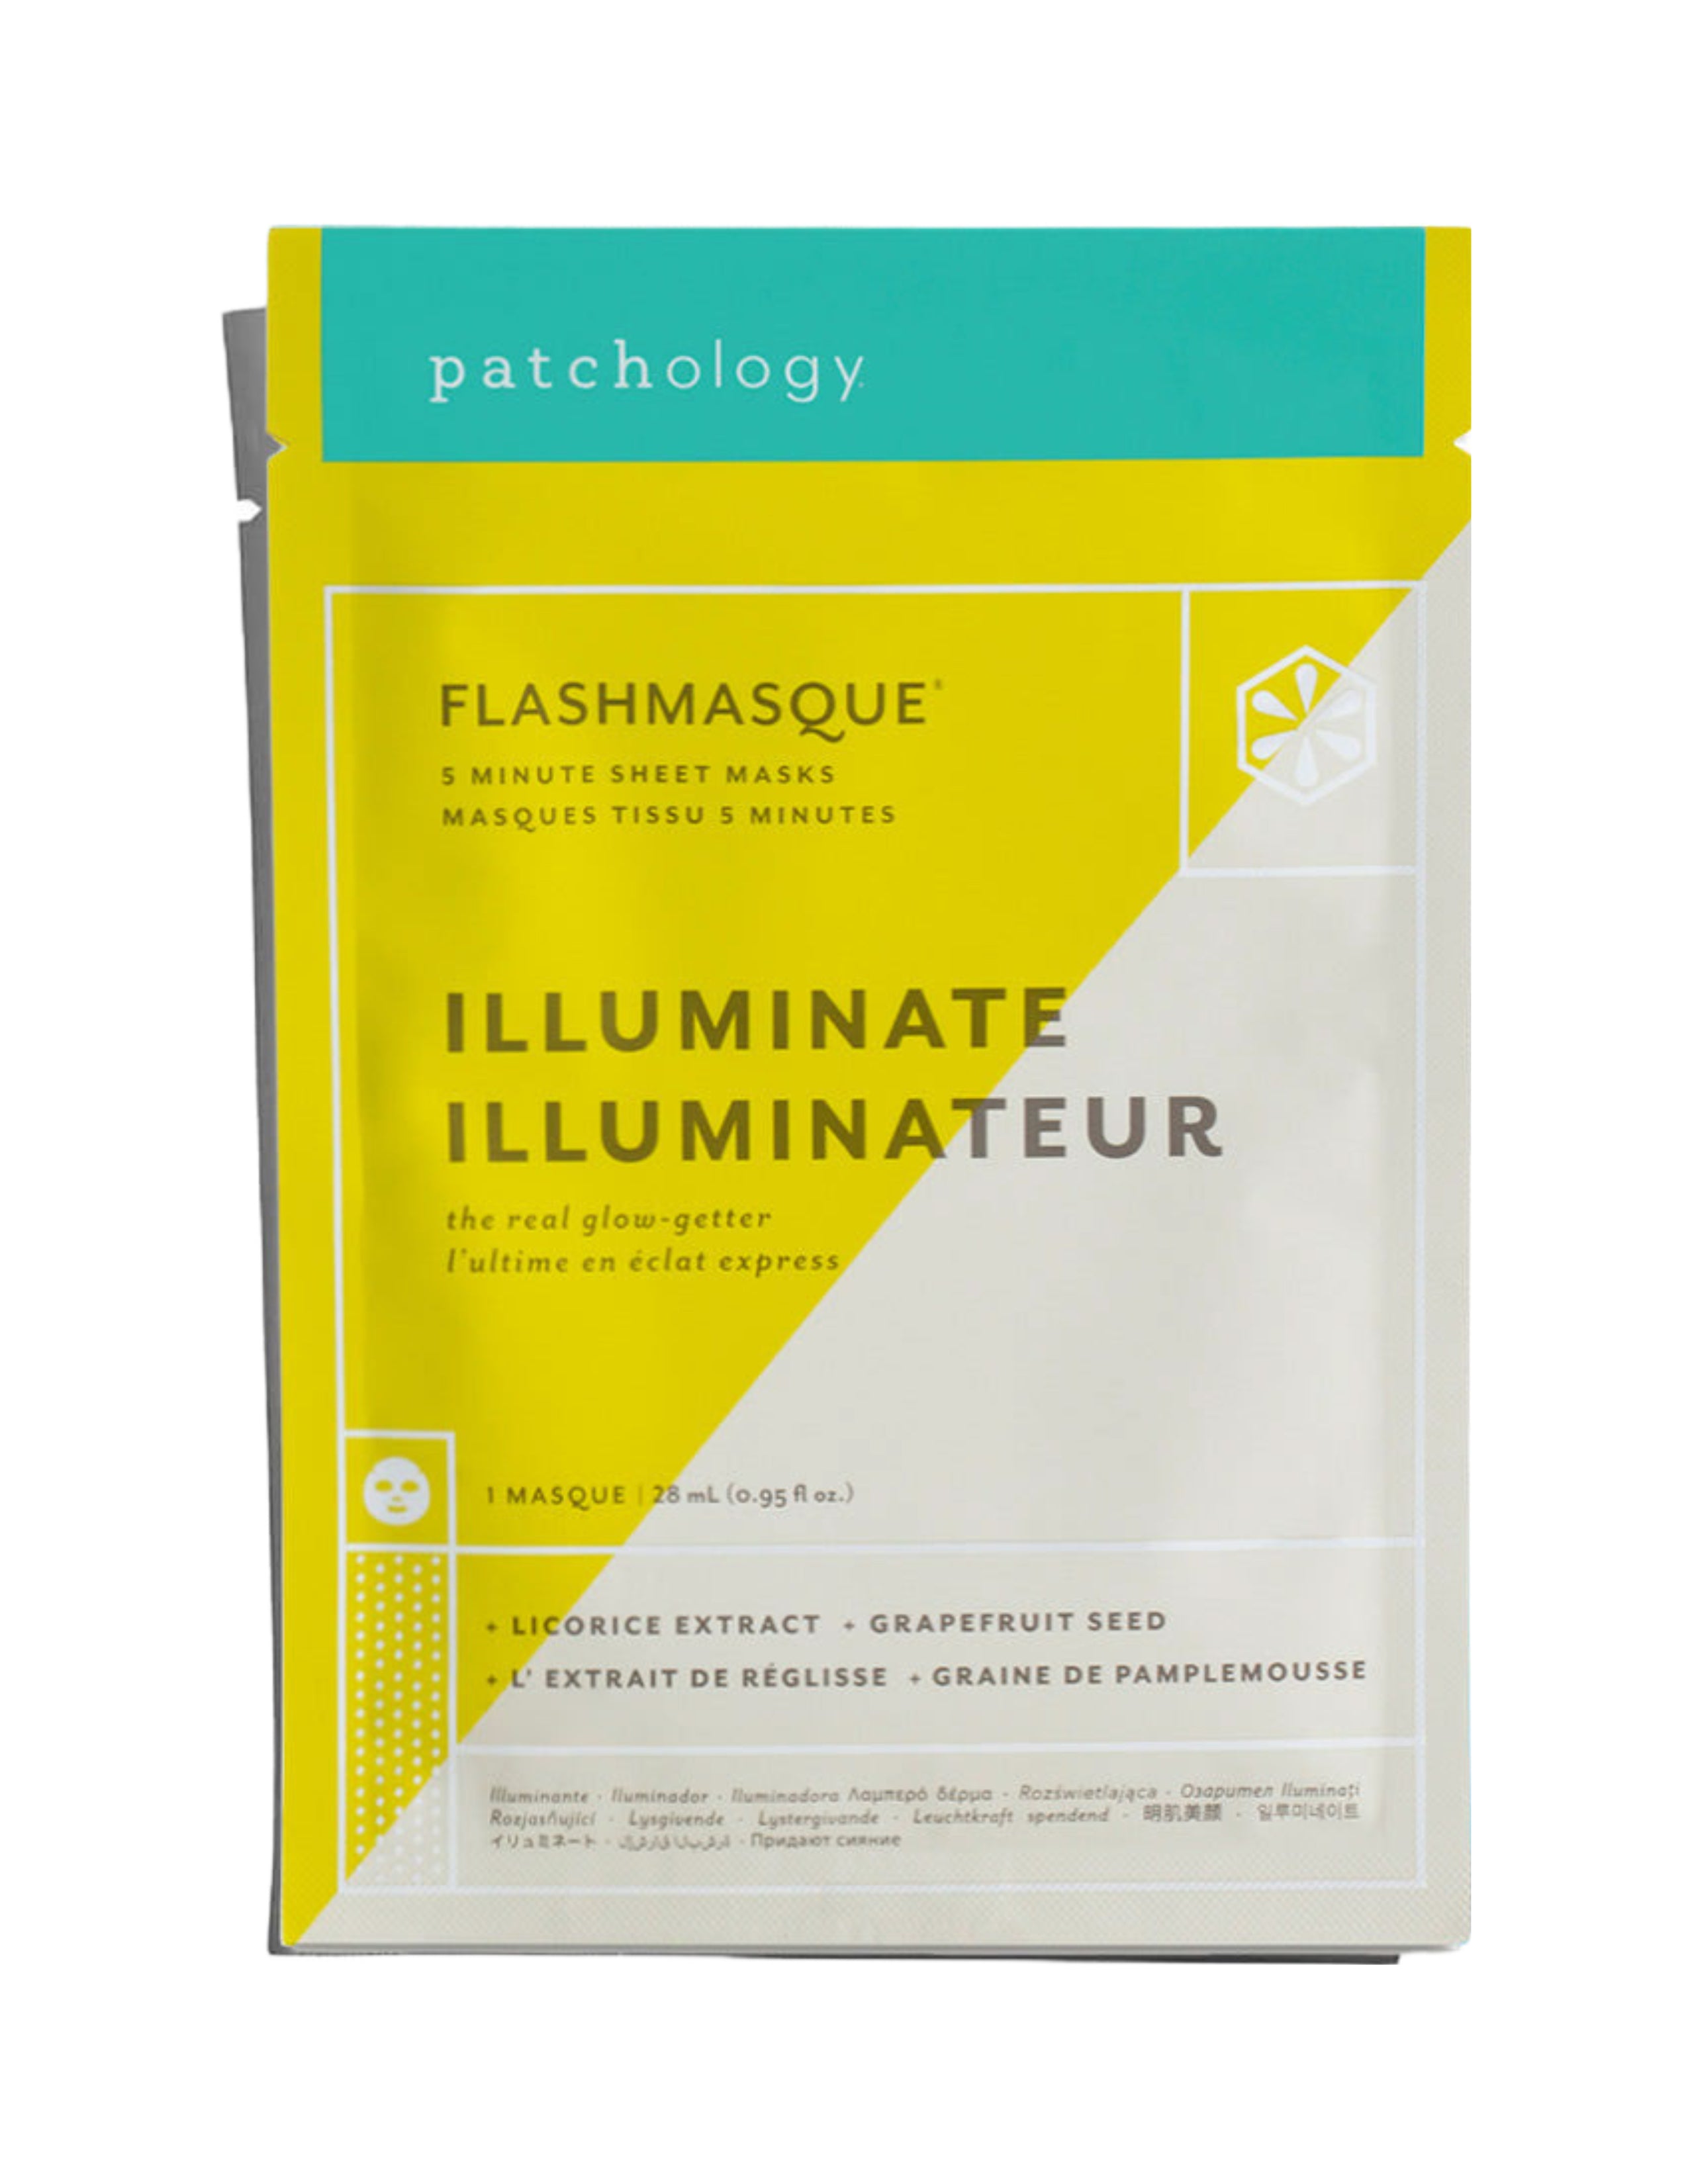 Illuminate 5 Minute Flashmasque - Single